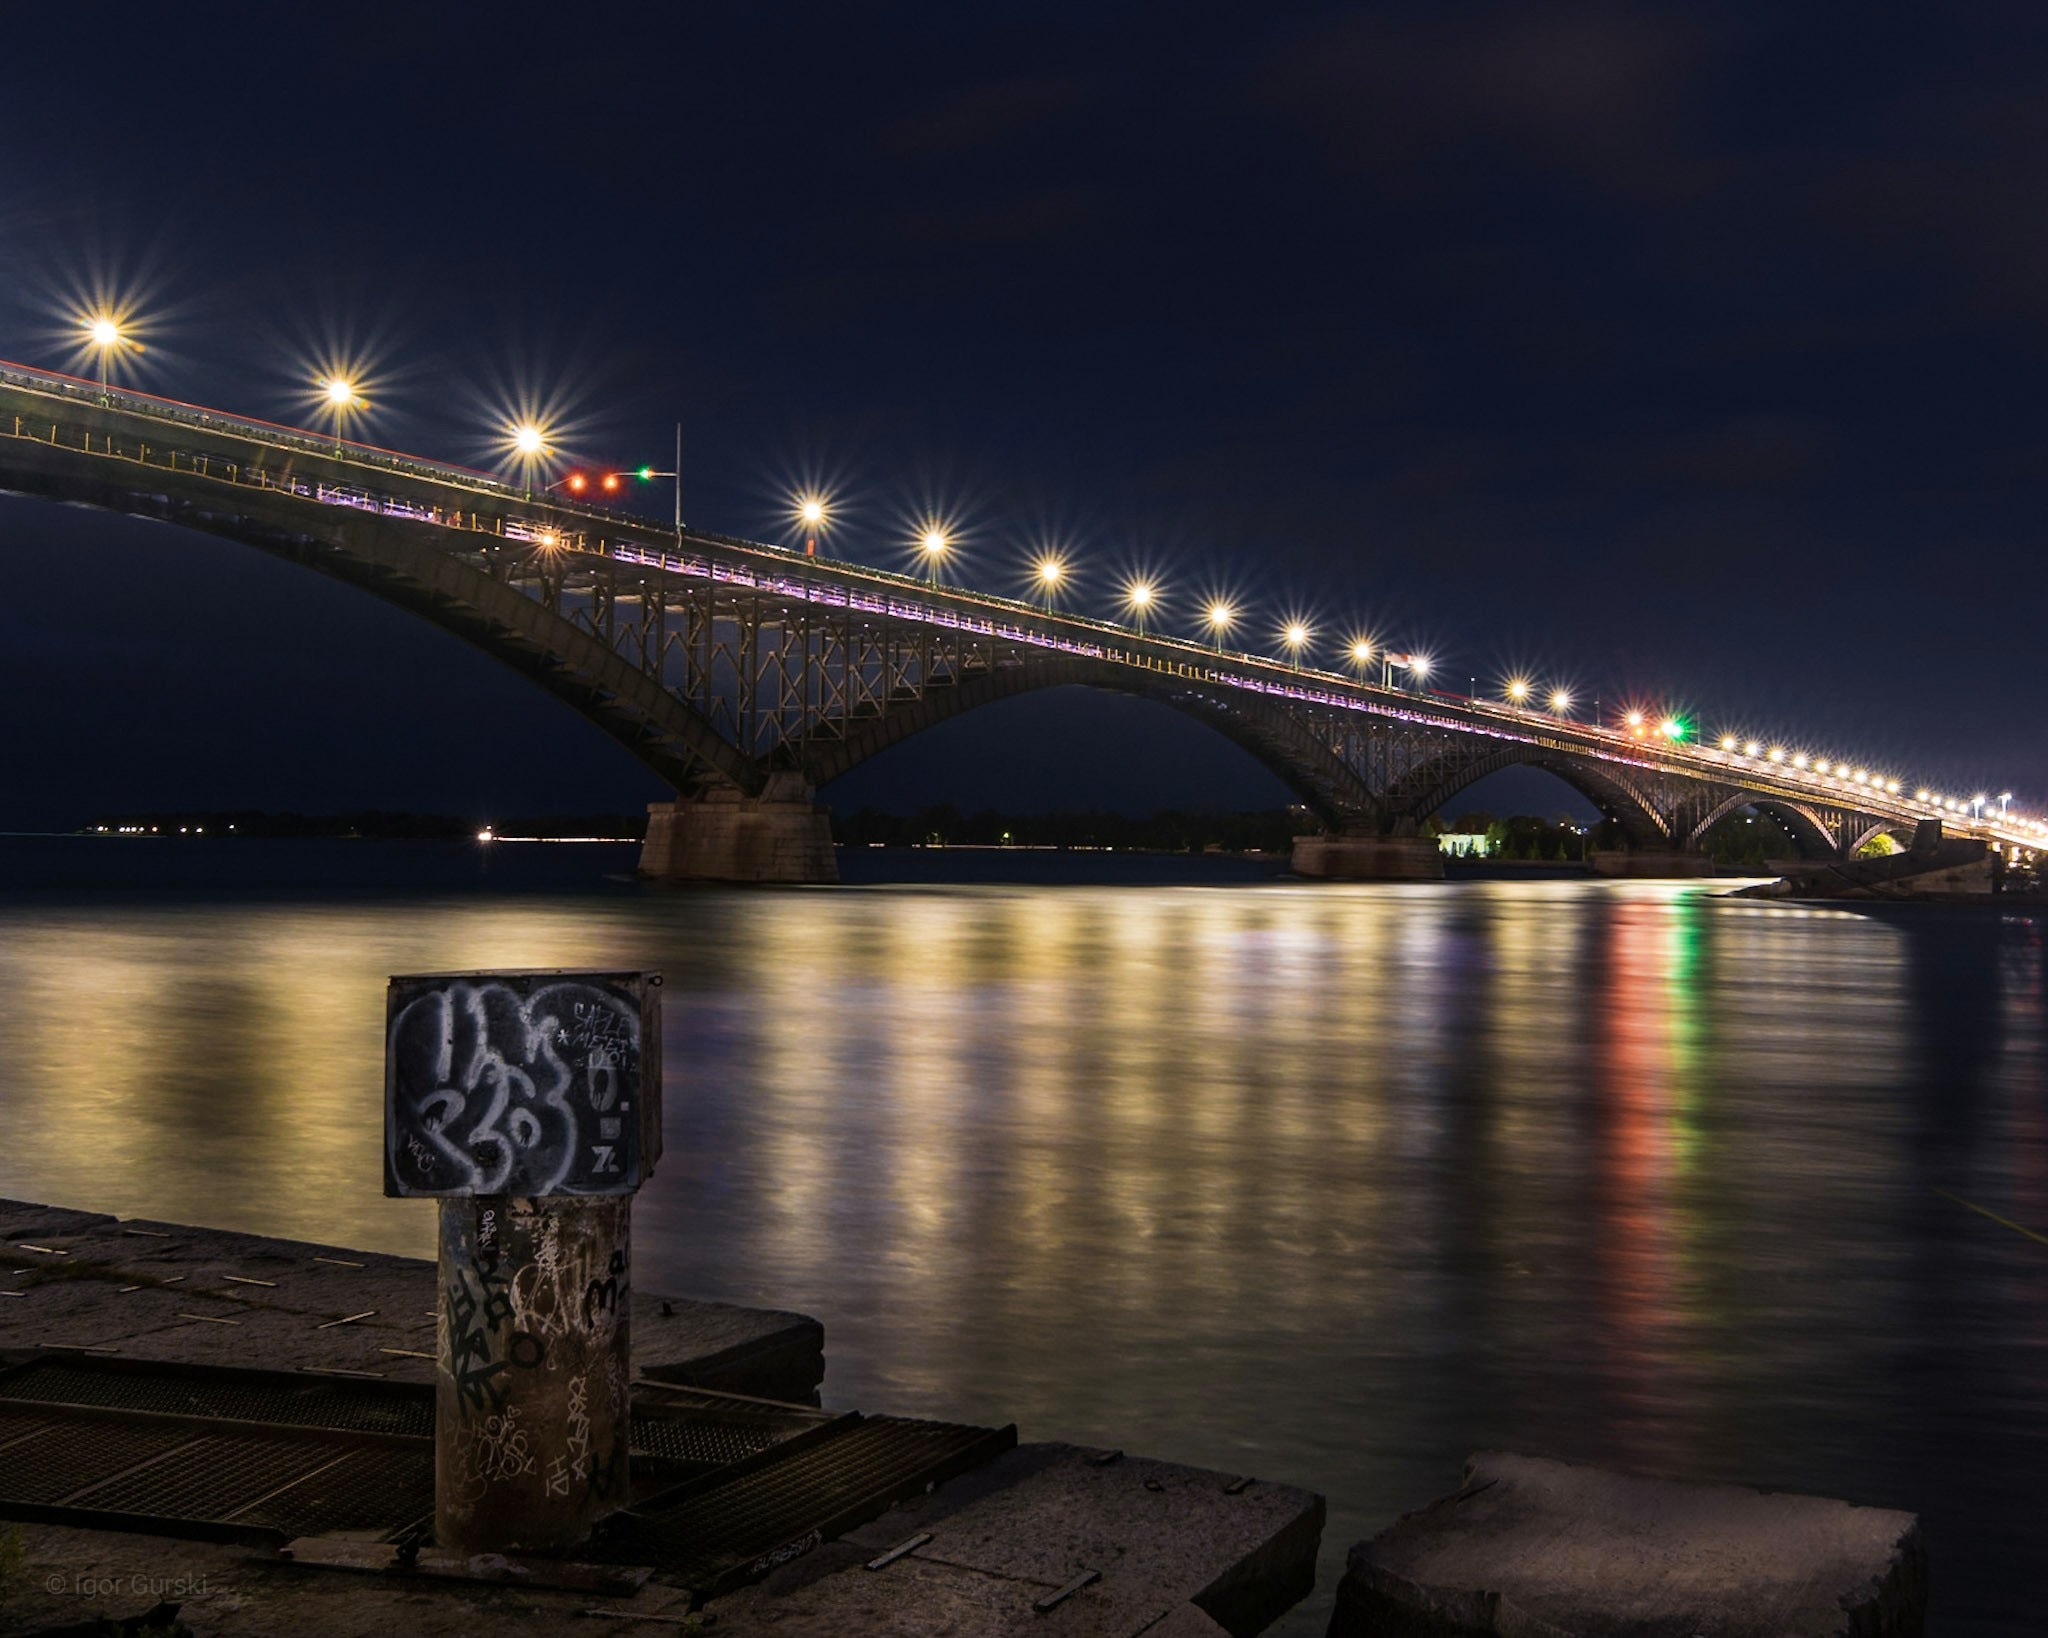 Peace Bridge at night! From the Bird's island pier.
#likealocal 